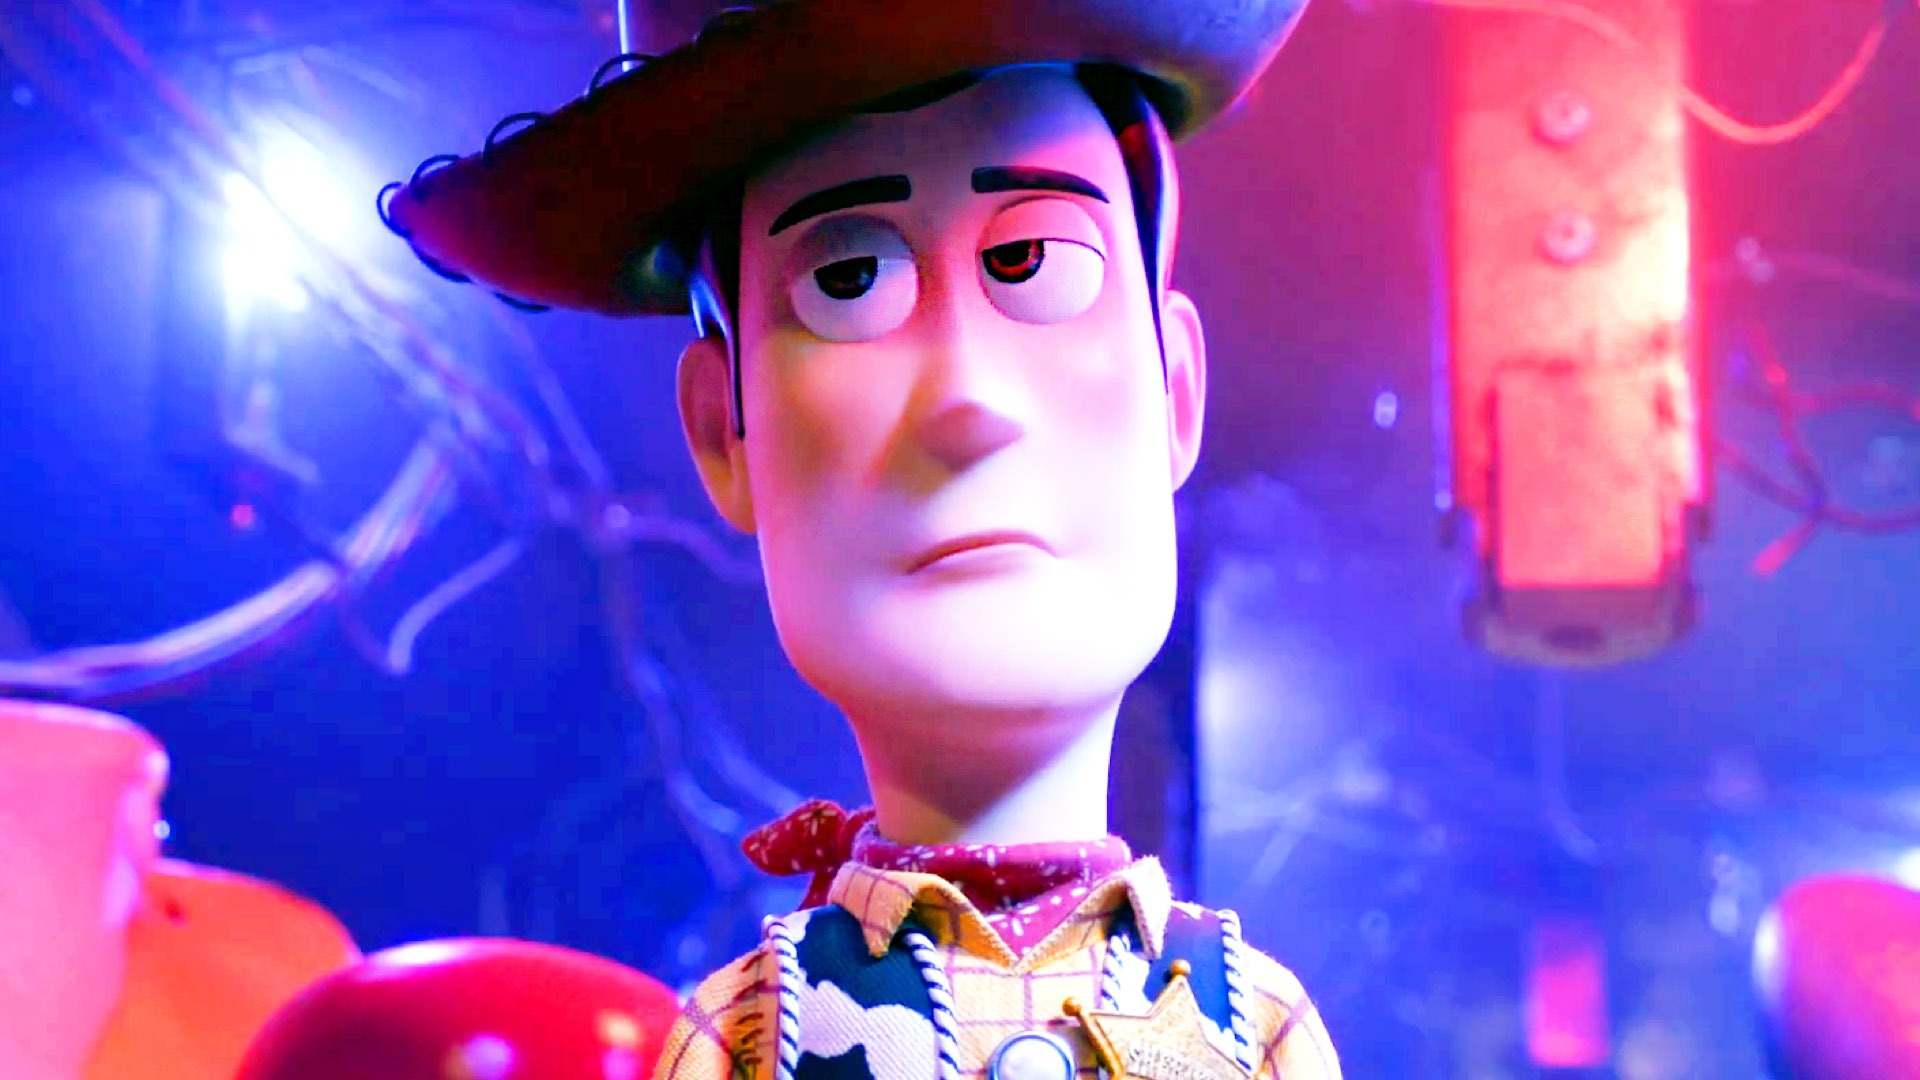 Interview: Pixar Producer Jonas Rivera on 'Toy Story 4' Bonnie's Dad